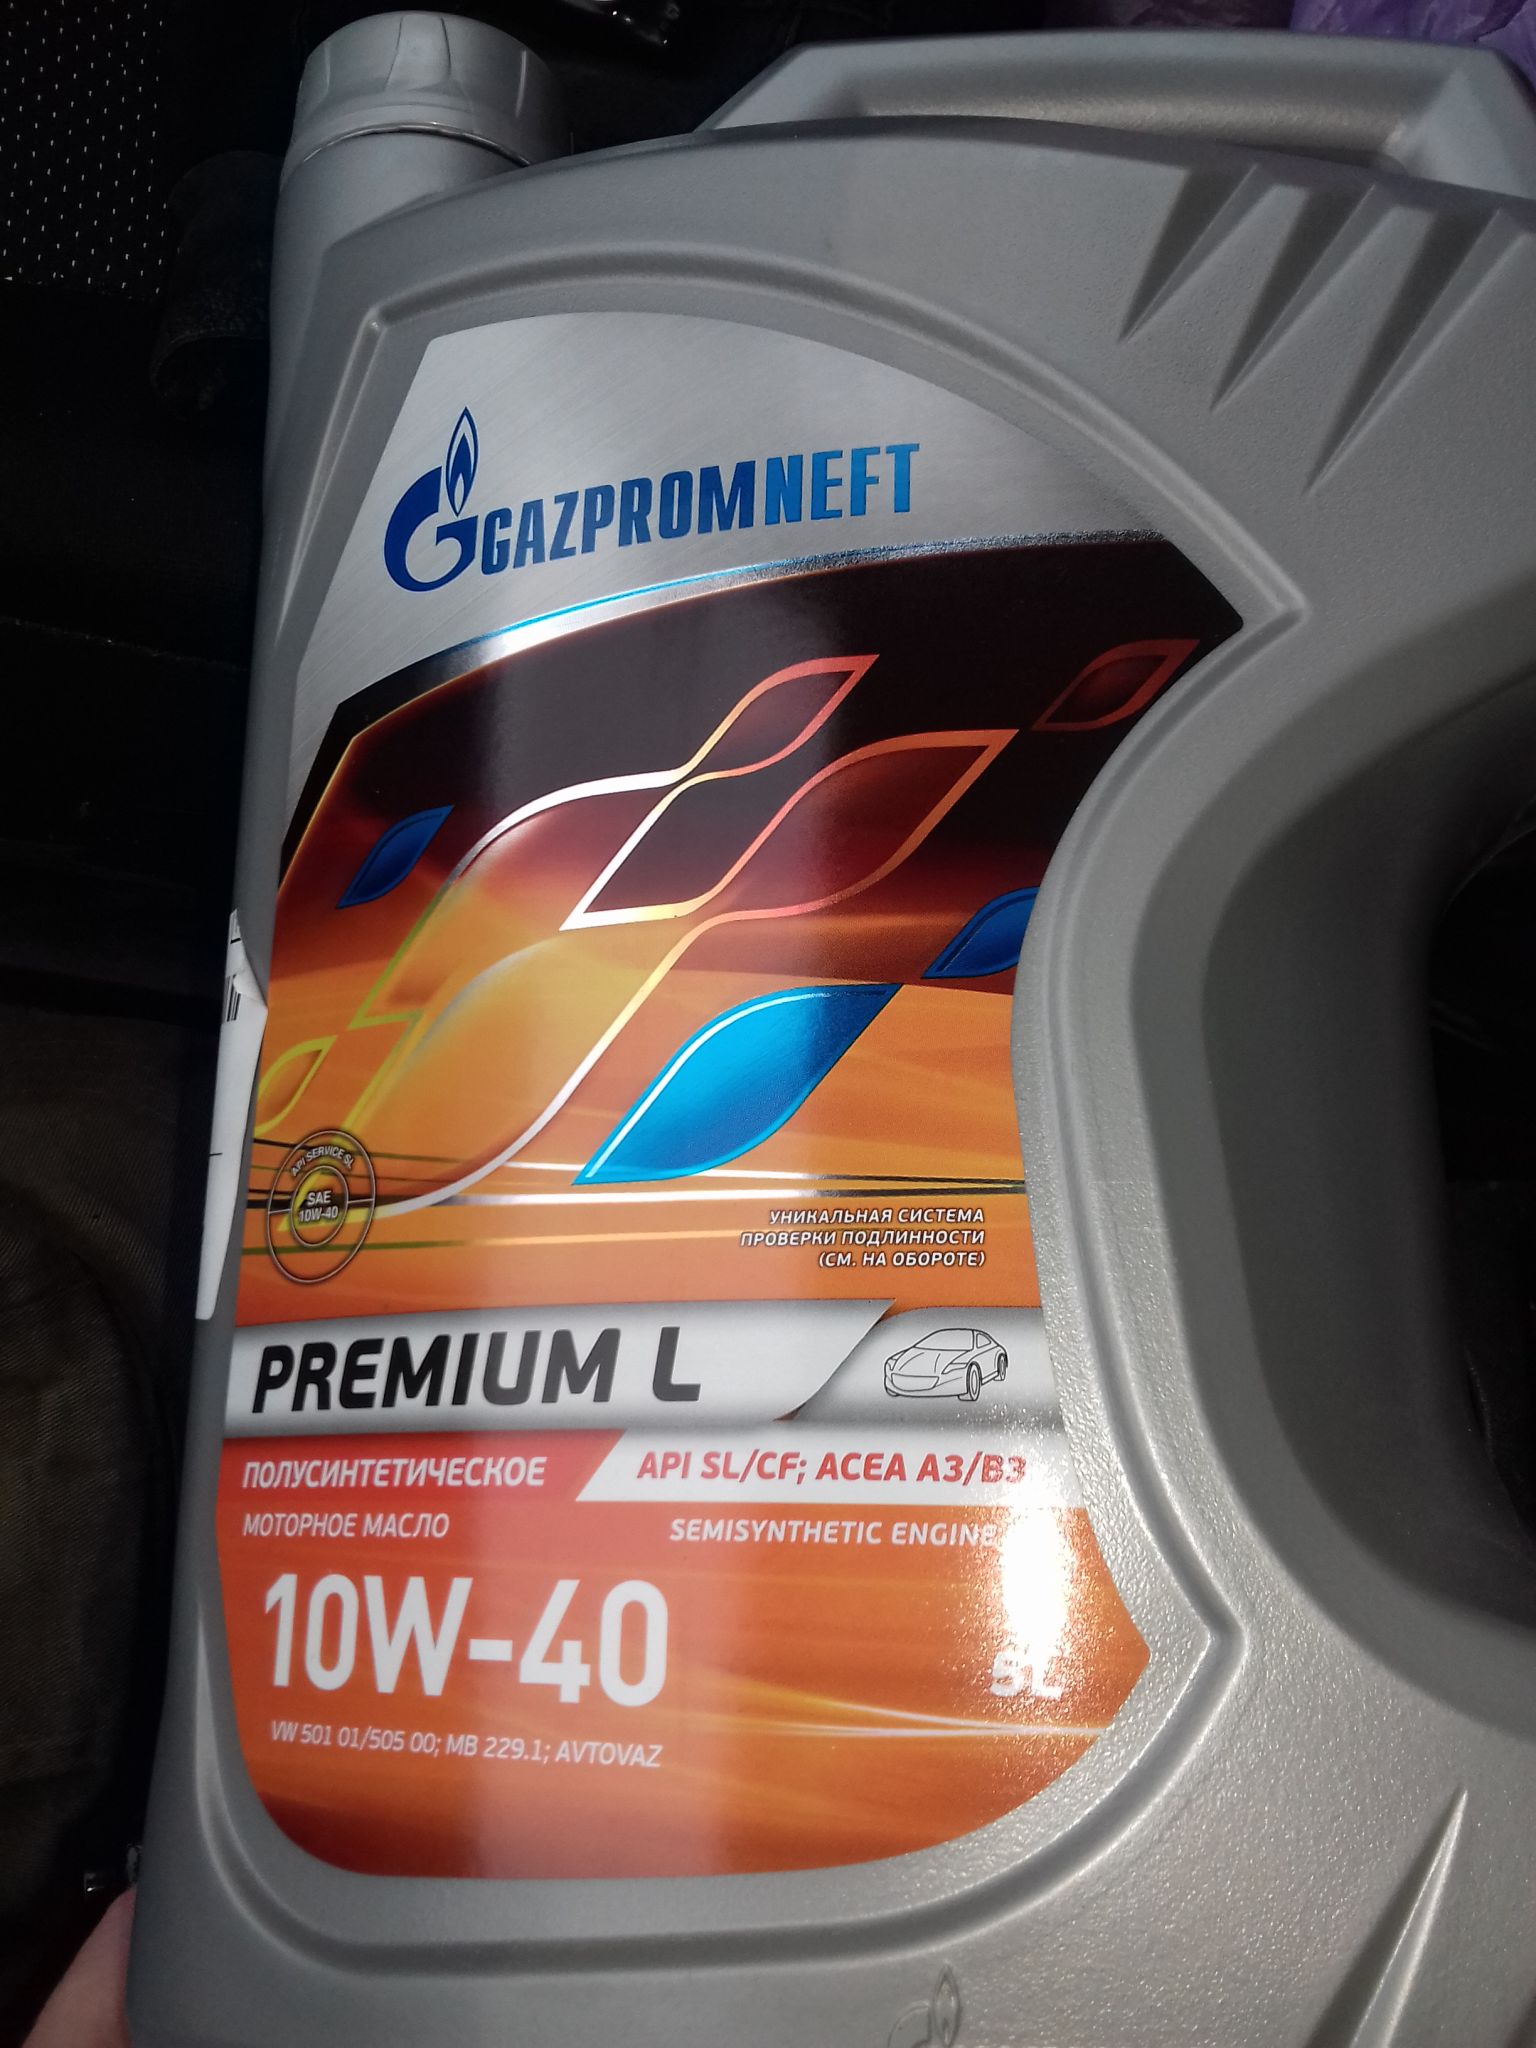 Масло gazpromneft premium l. Gazpromneft Premium l 10w-40 5l. Масло Газпромнефть 10w 40 Premium l. 2389900132 Gazpromneft Premium l 10w-40 5л. Газпромнефть премиум л 10w-40.